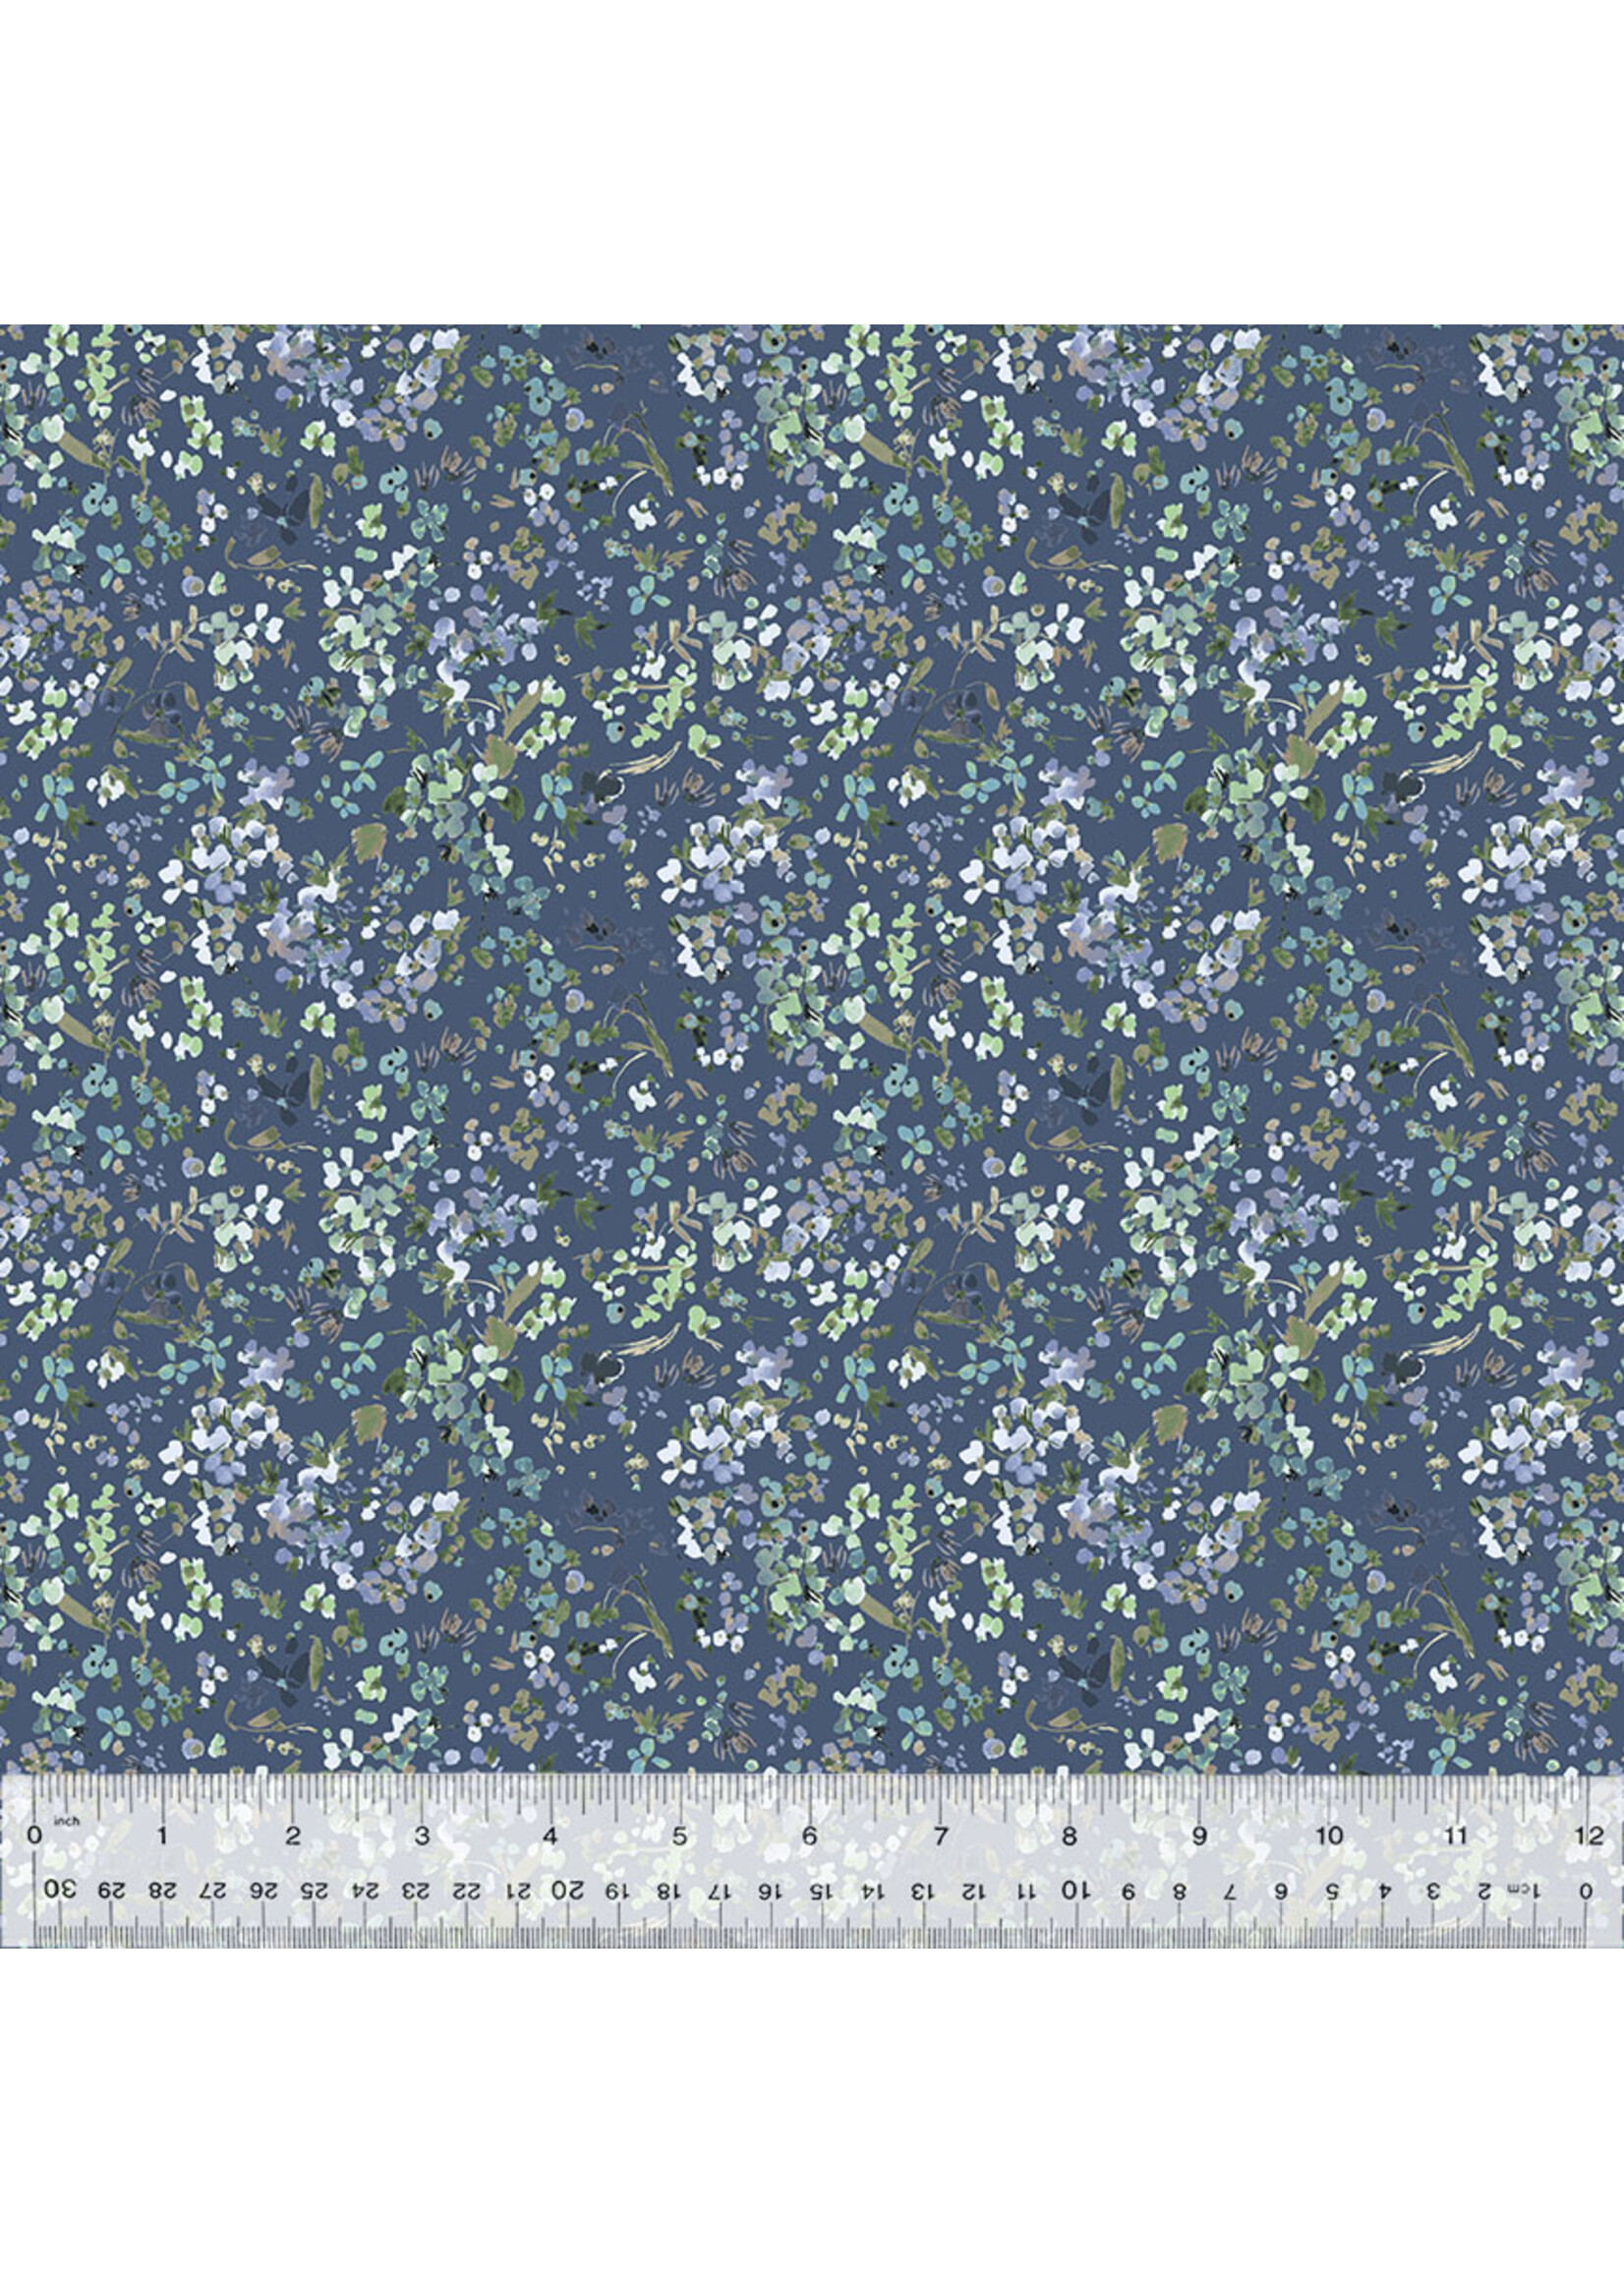 Windham Fabrics Floret - Wildflower - Blue Thistle - 380816